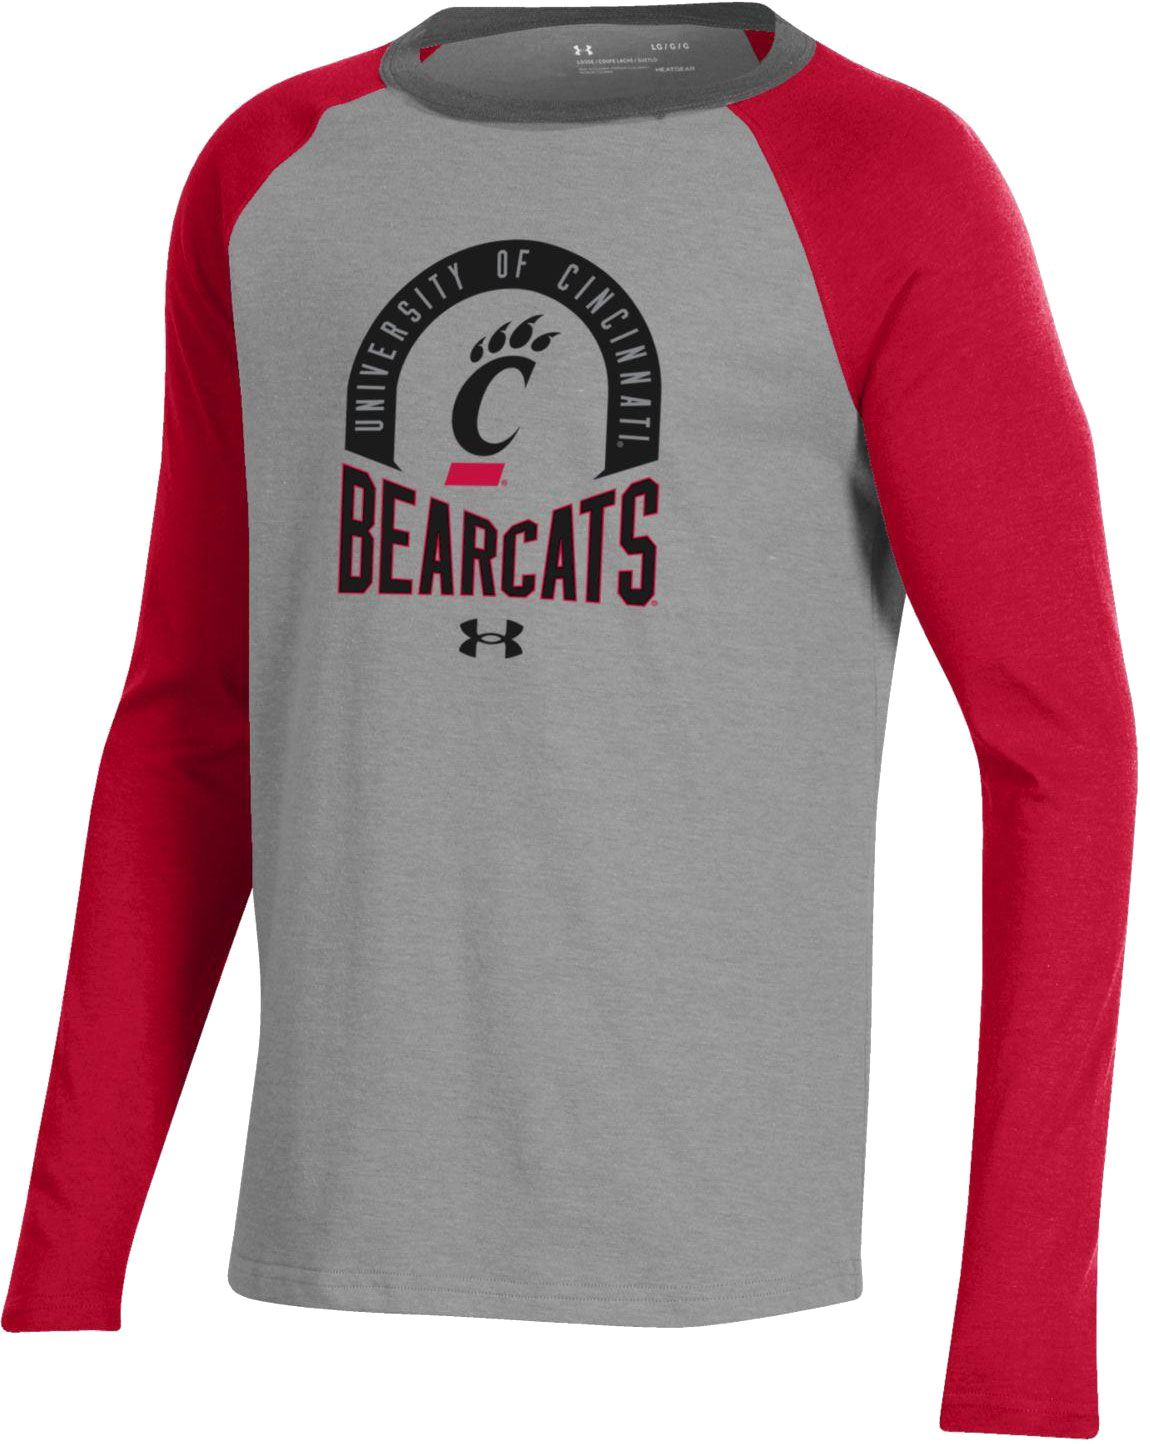 cincinnati bearcats baseball jersey